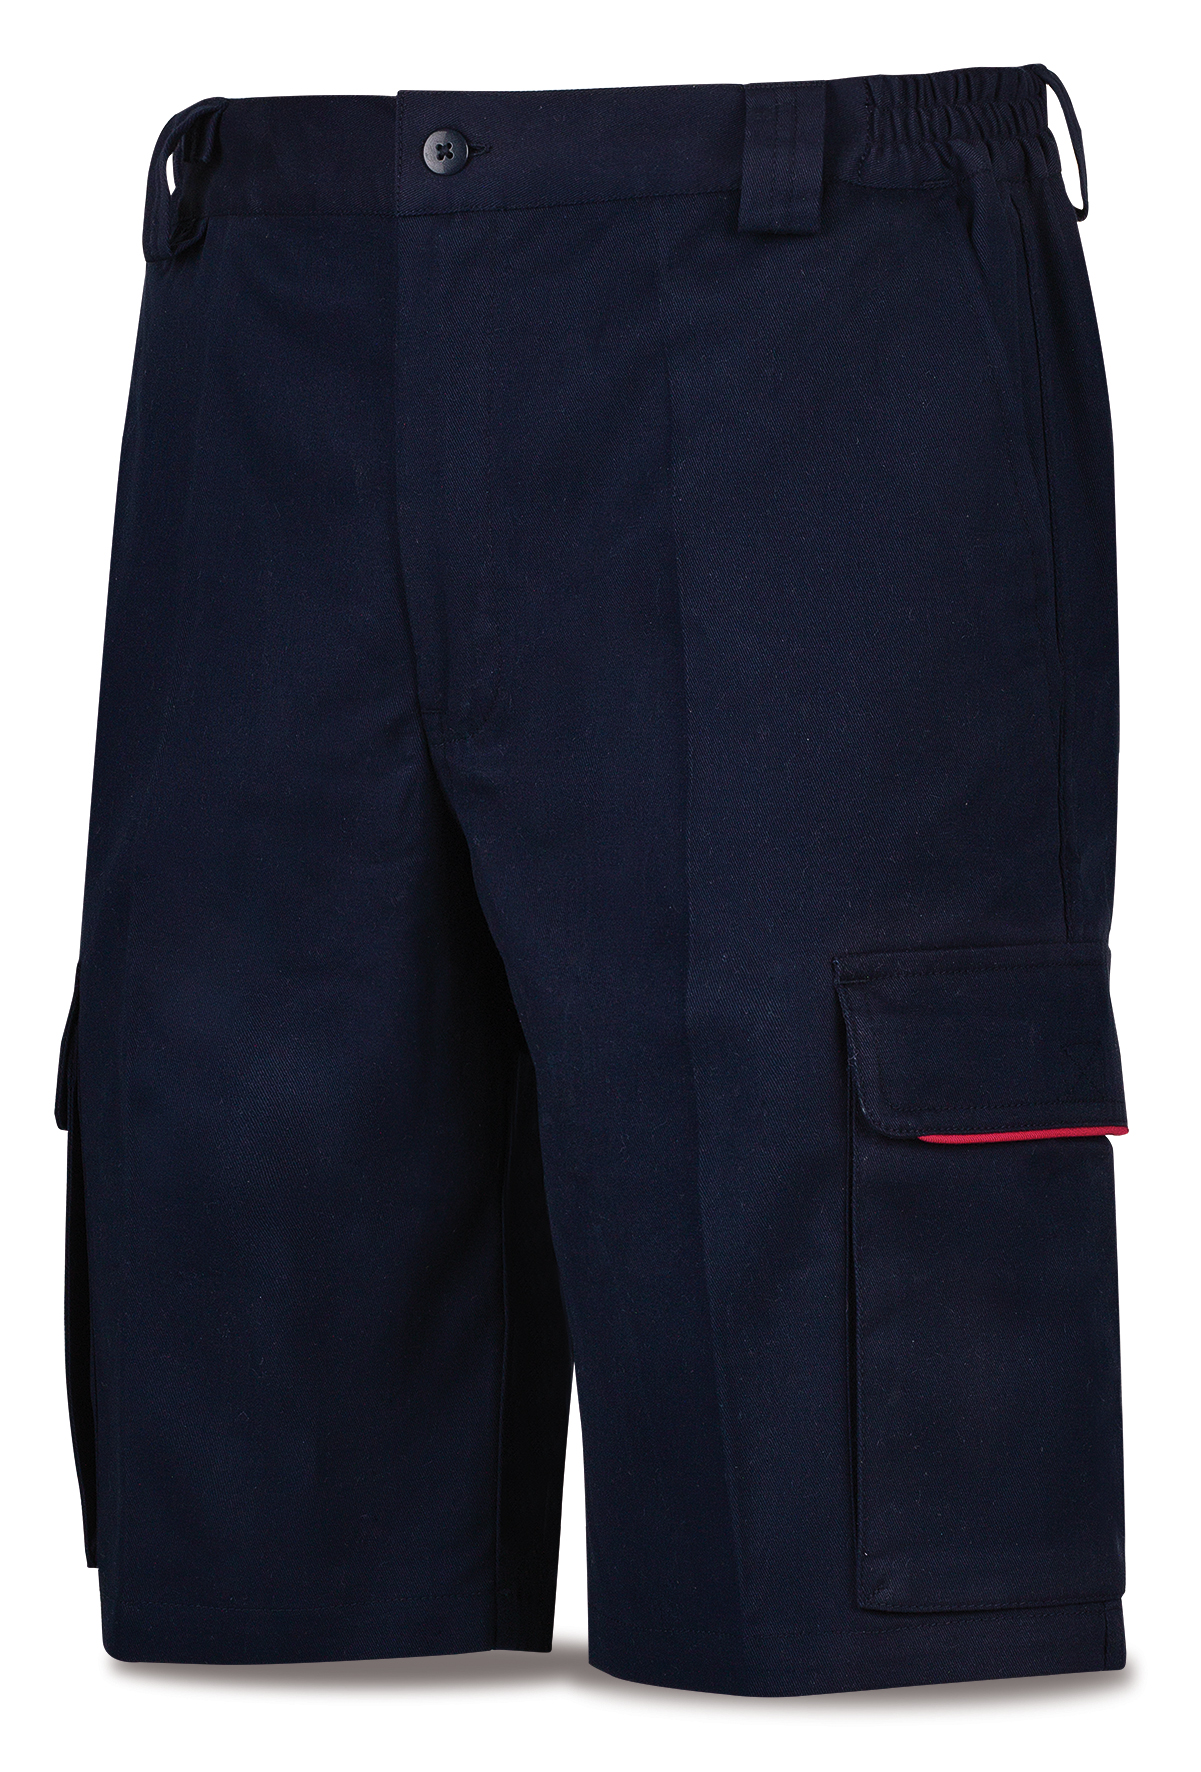 588SBSAMR Vetements de travail laboral       Série Casual Basic STRETCH Bermuda shorts navy blue/red cotton 240 gr.